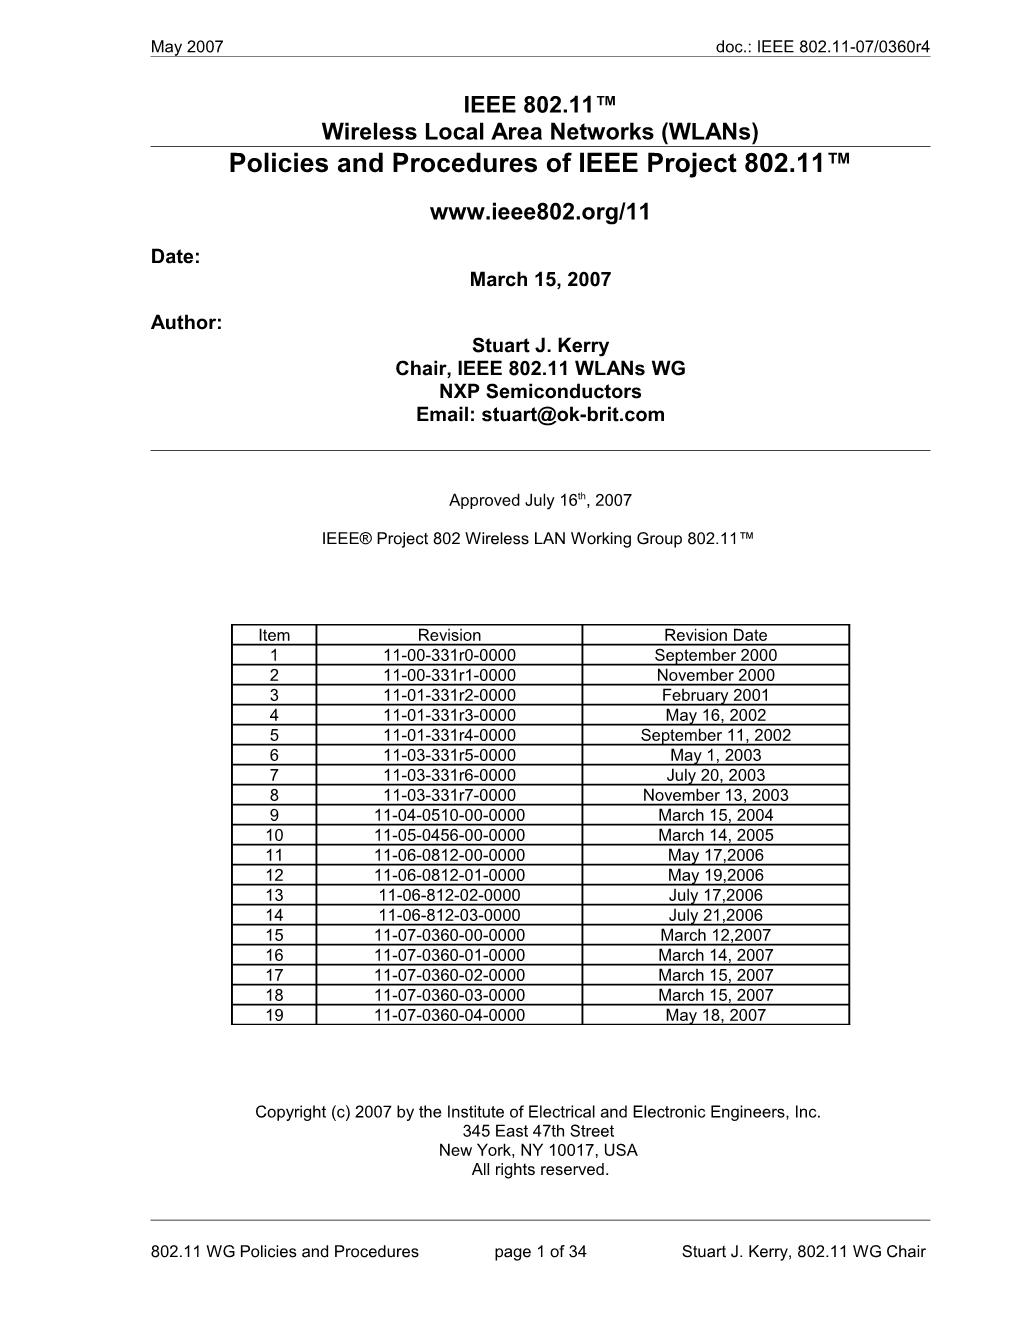 Policies and Procedures of IEEE Project 802.11